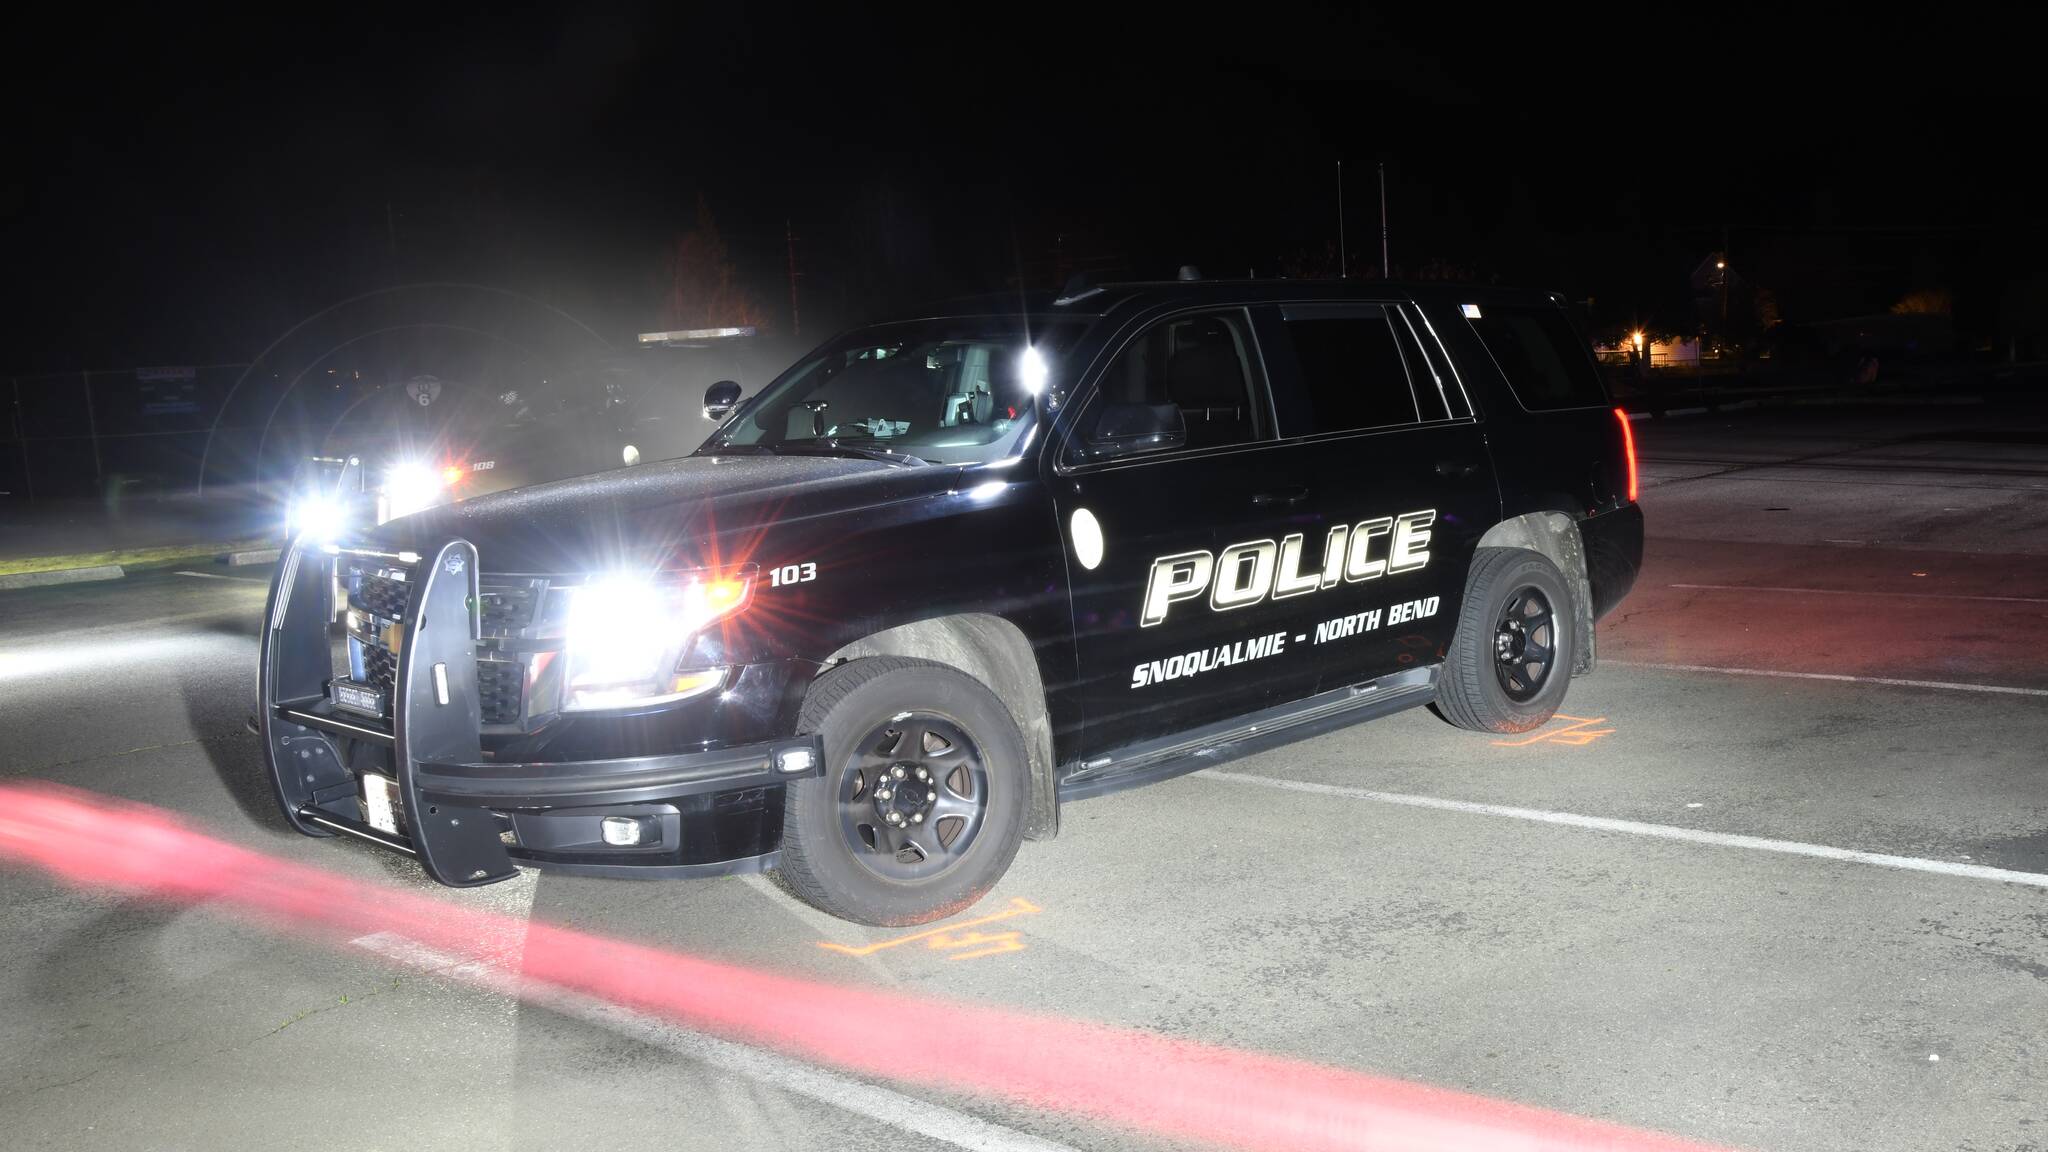 A Snoqualmie Police van. Courtesy photo.